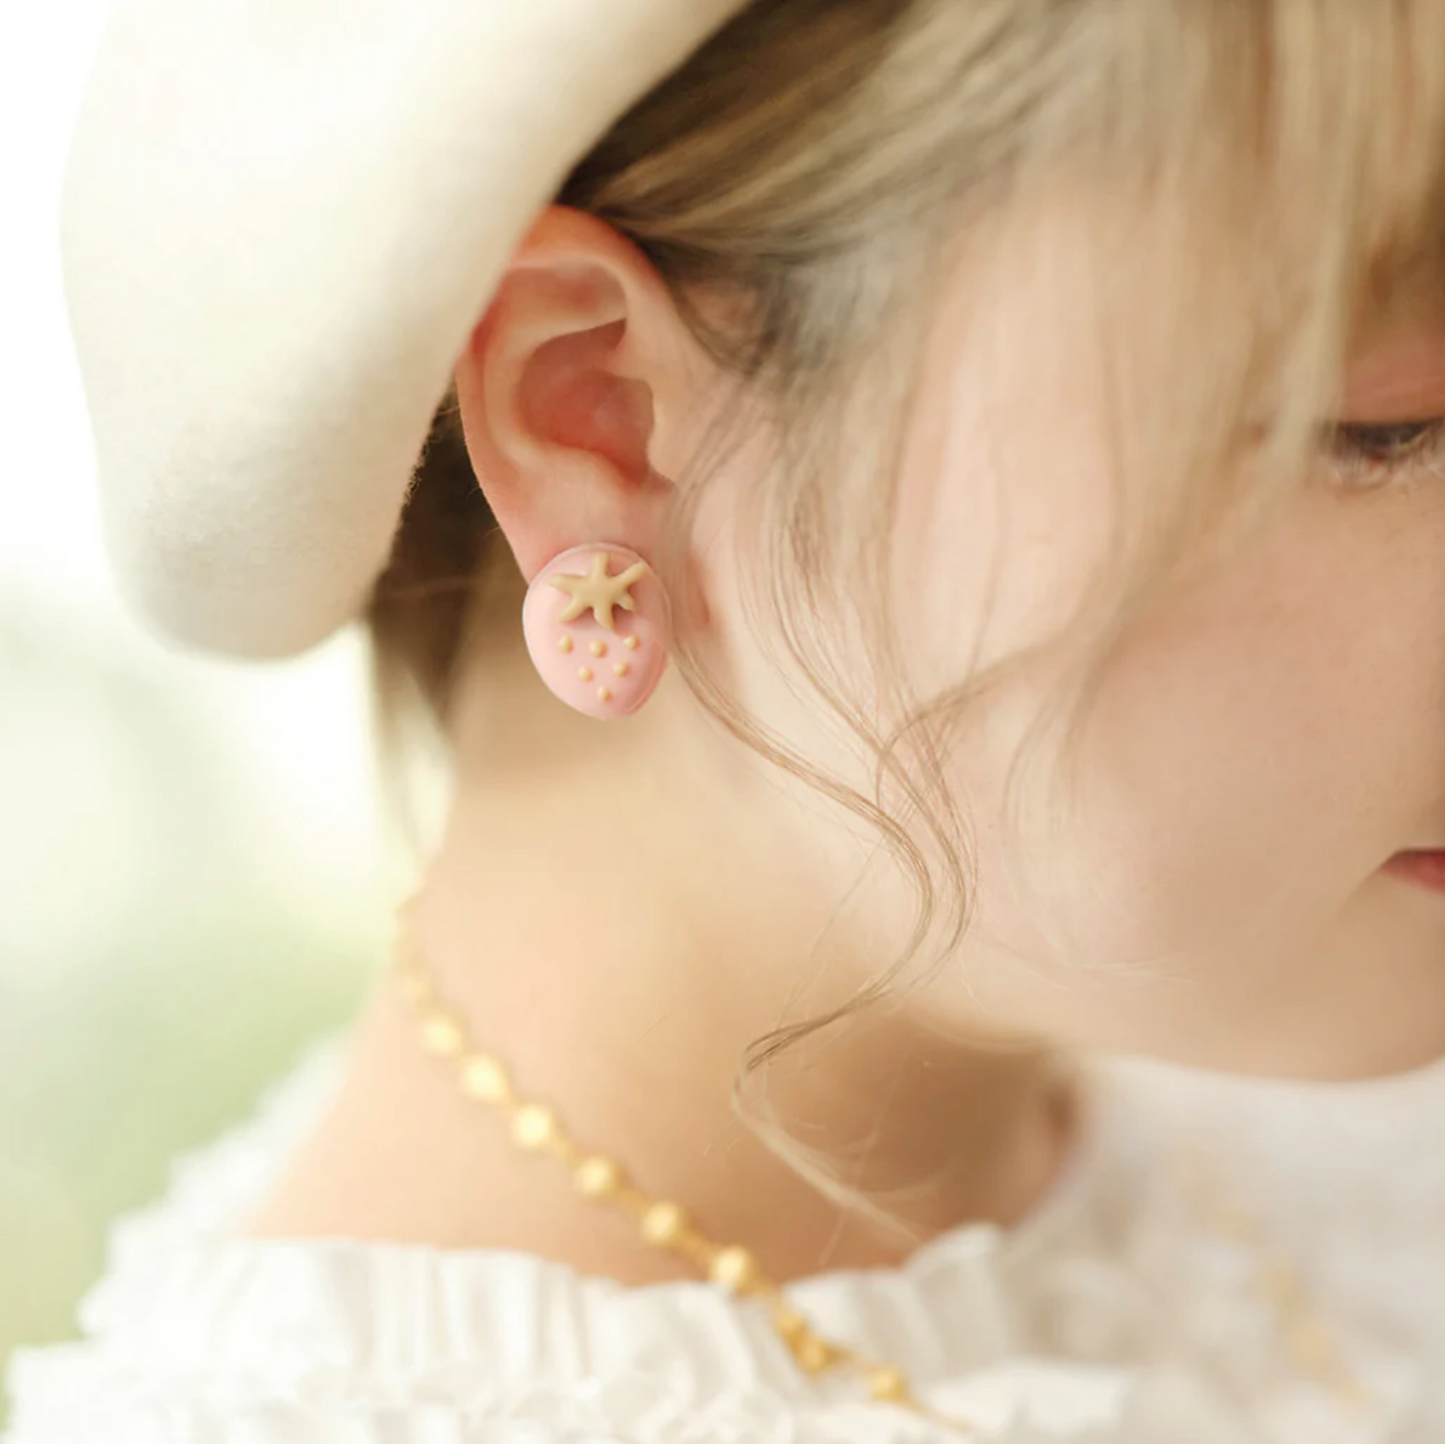 The Strawberry Macaron Earring